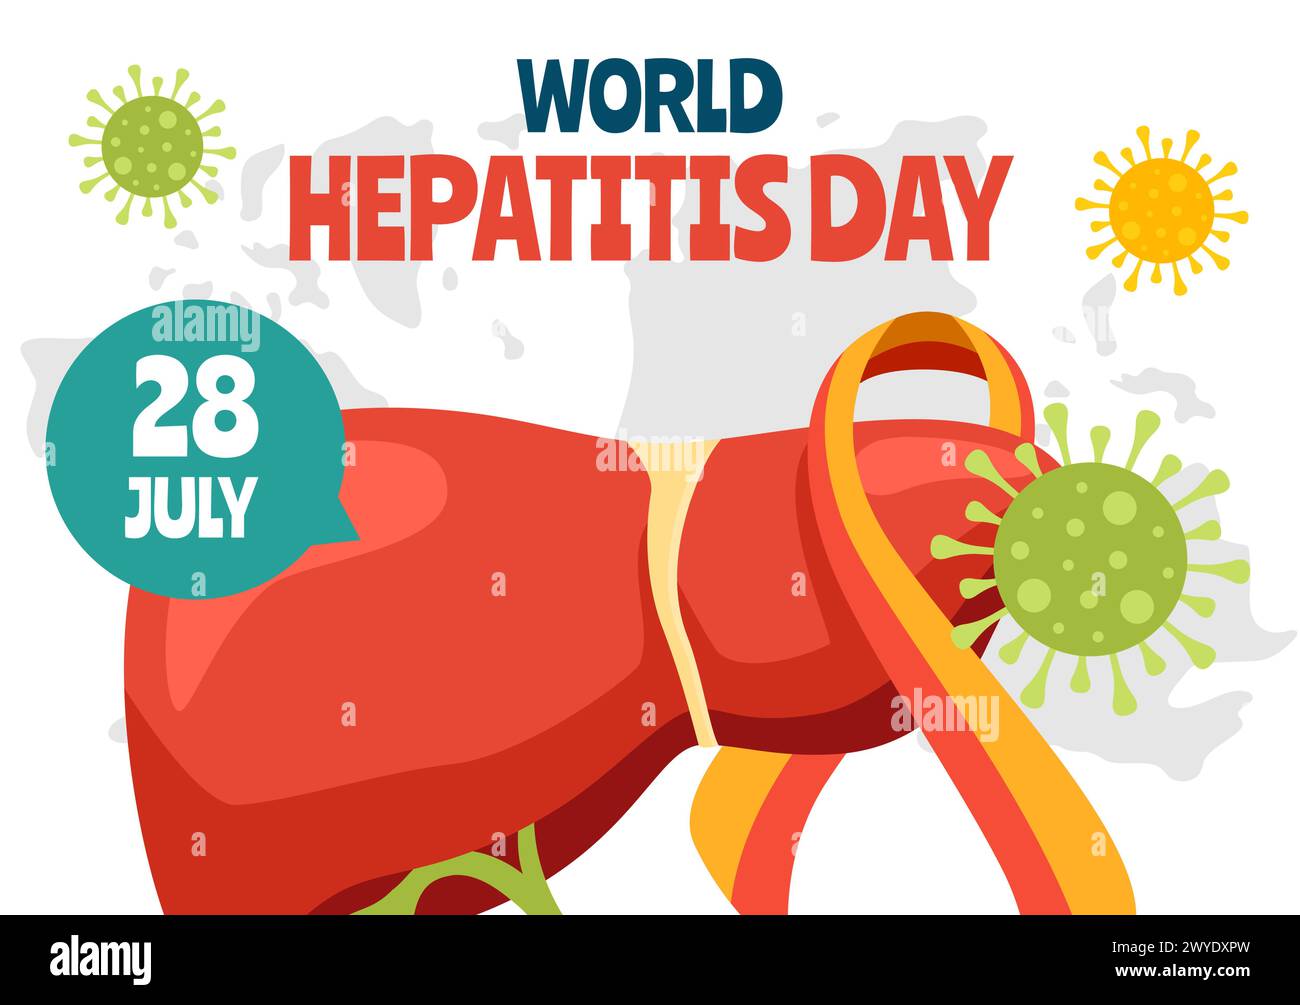 Hepatitis Day Social Media Background Flat Cartoon Hand Drawn Templates Illustration Stock Vector